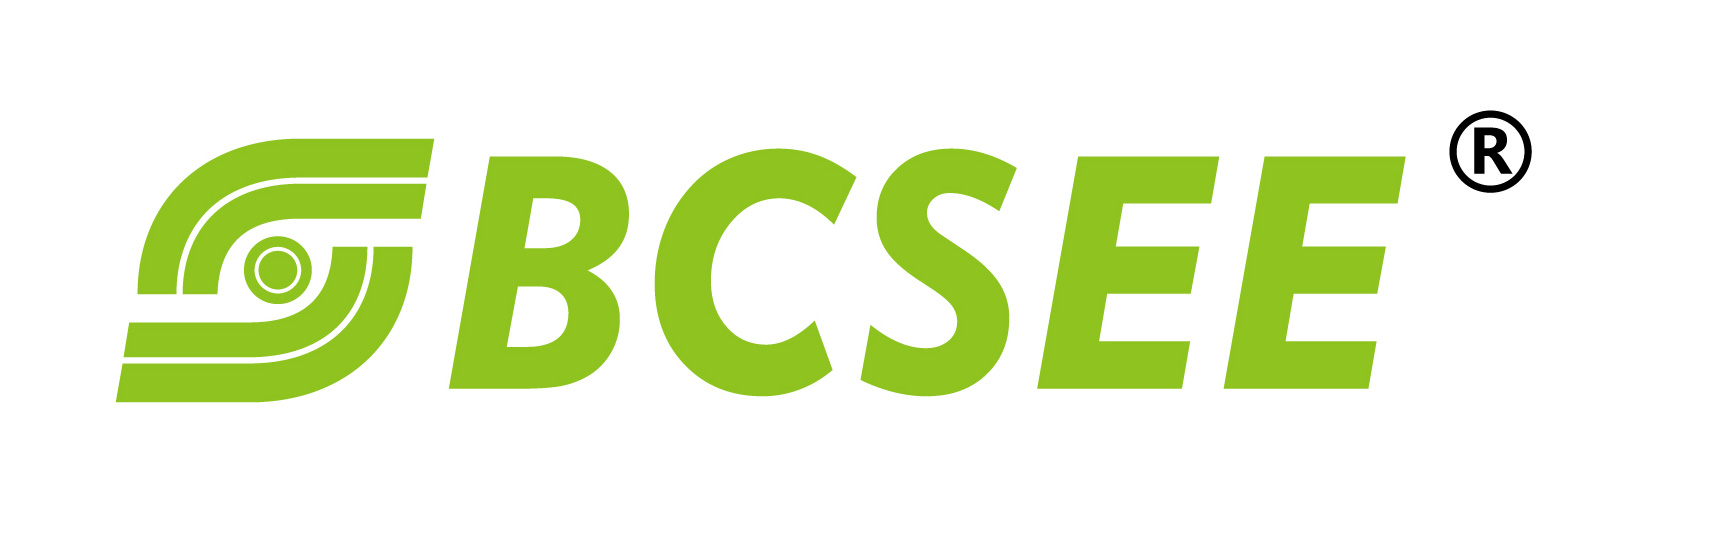 BCSEE Electronics Limited